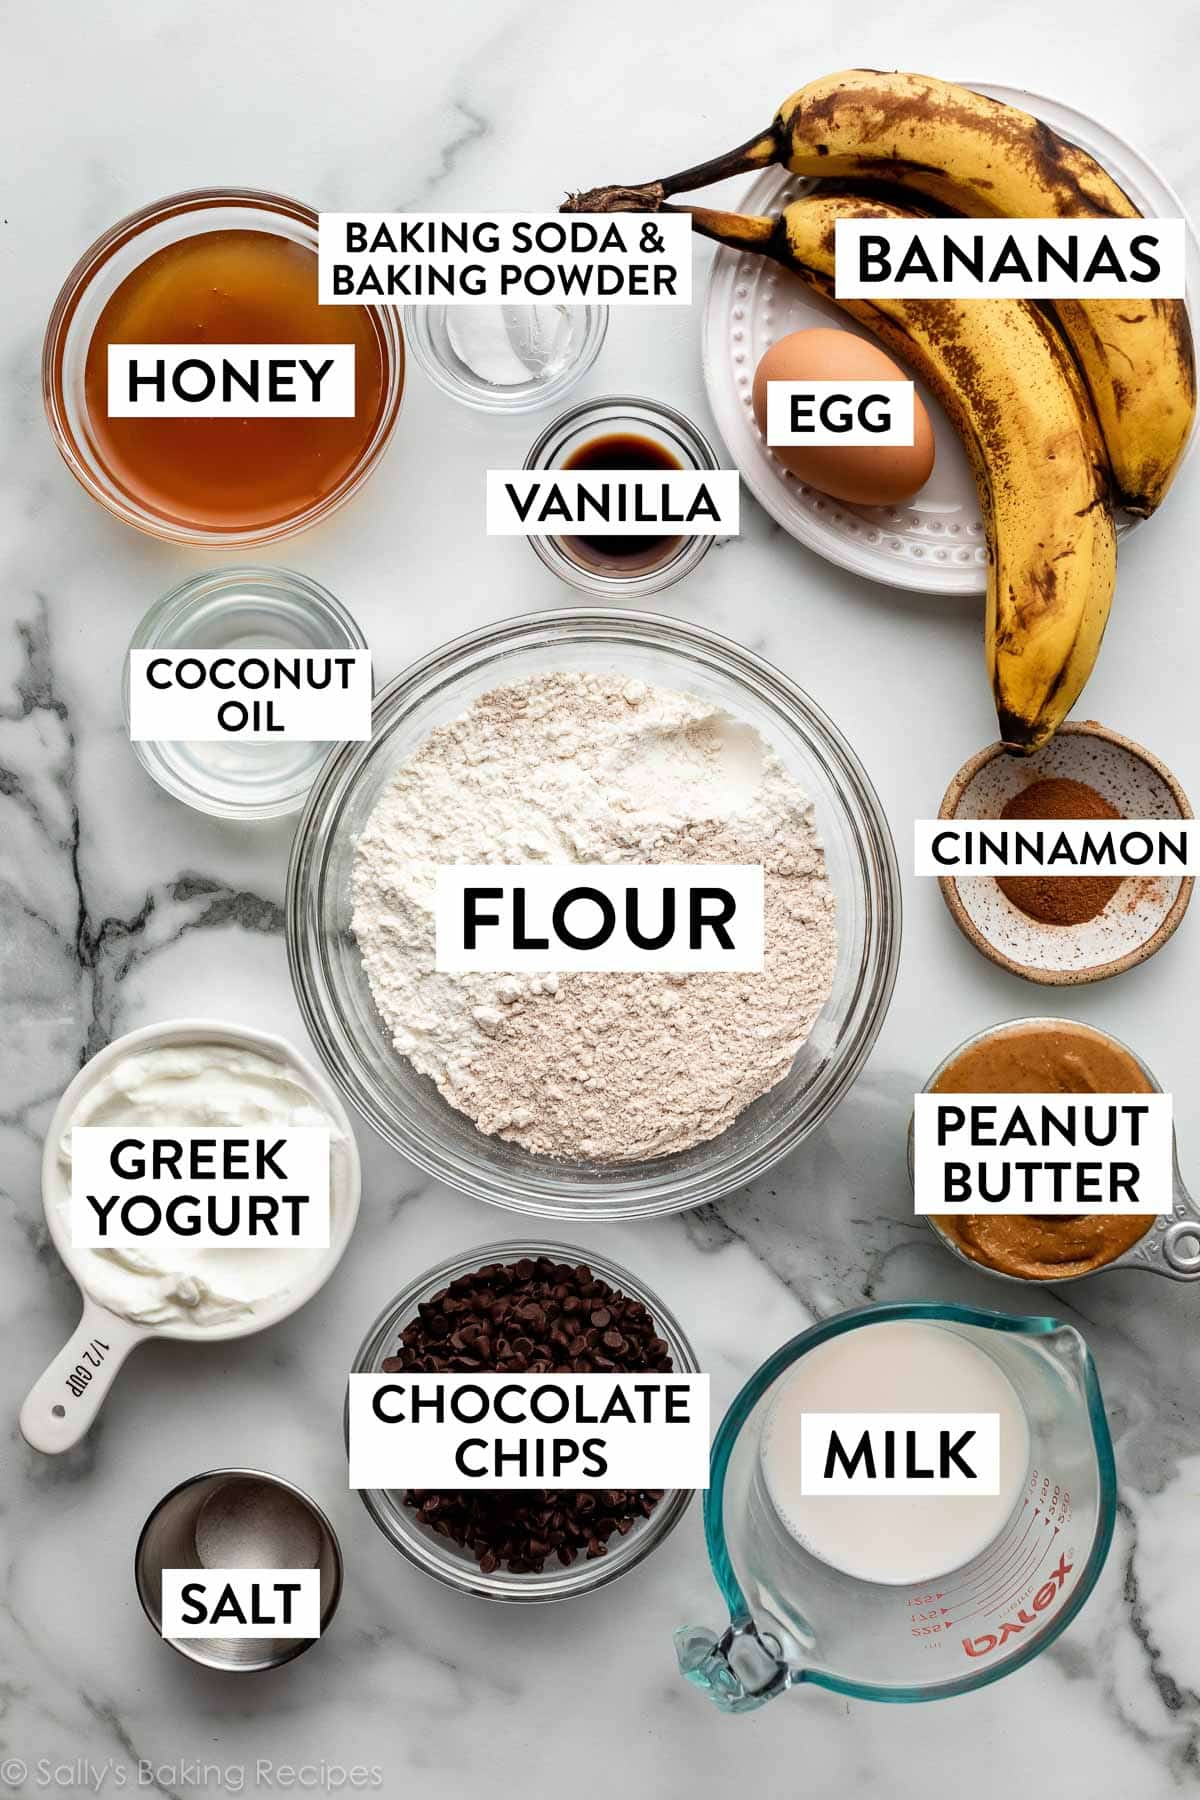 ingredients on marble backdrop including bananas, honey, flour, milk, peanut butter, greek yogurt, and more.